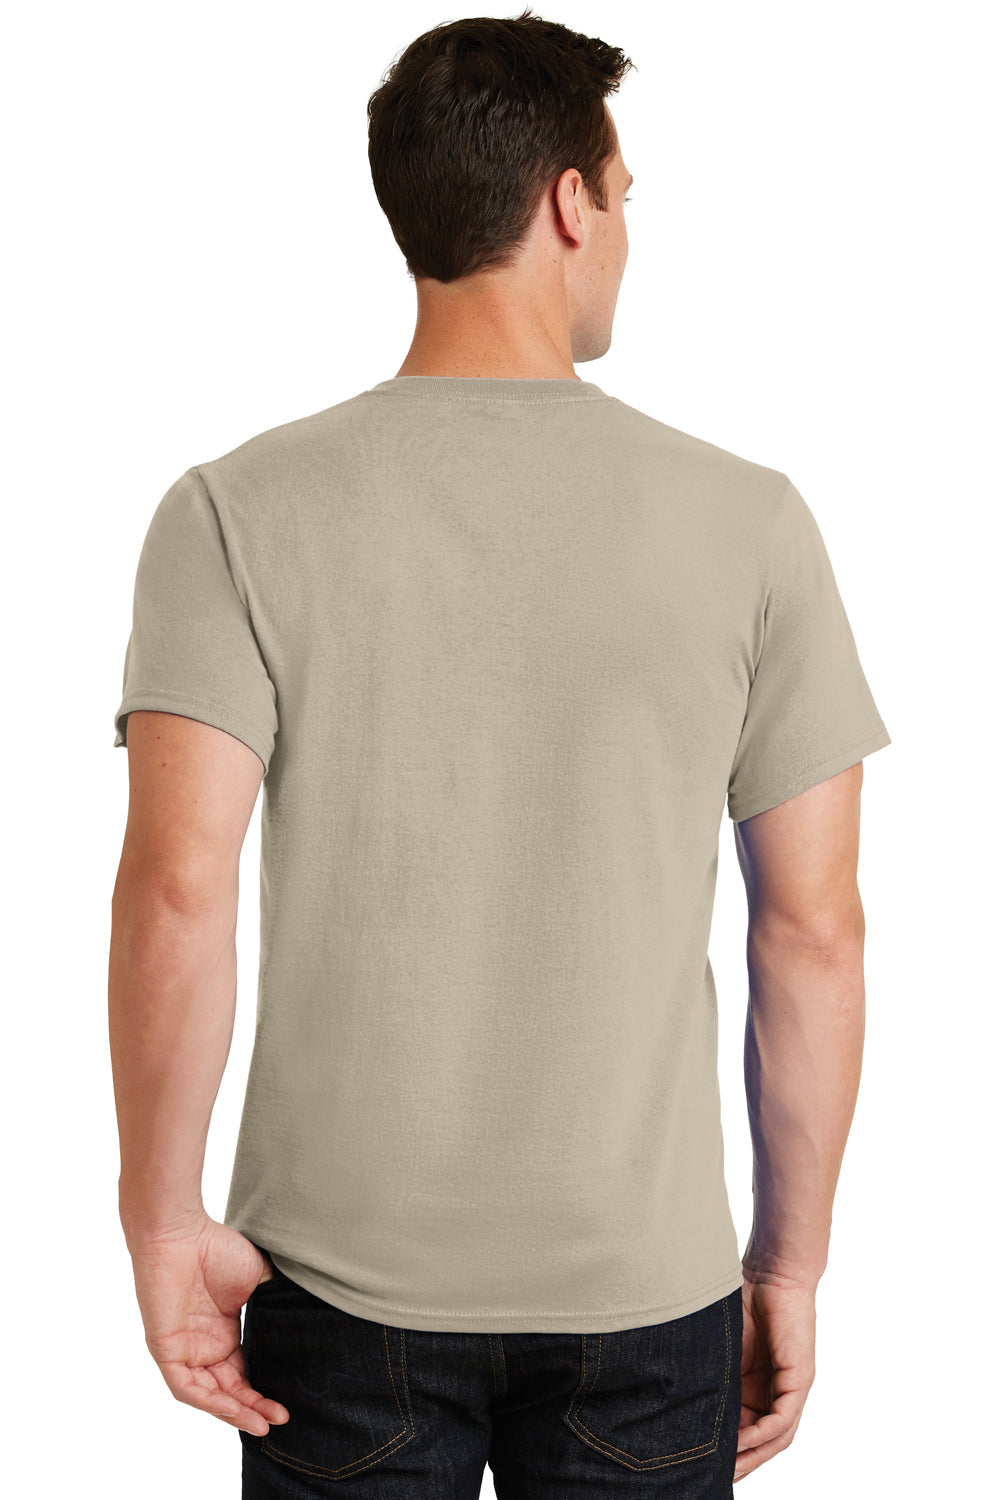 Port & Company PC61 Mens Essential Short Sleeve Crewneck T-Shirt Light Sand Brown Back